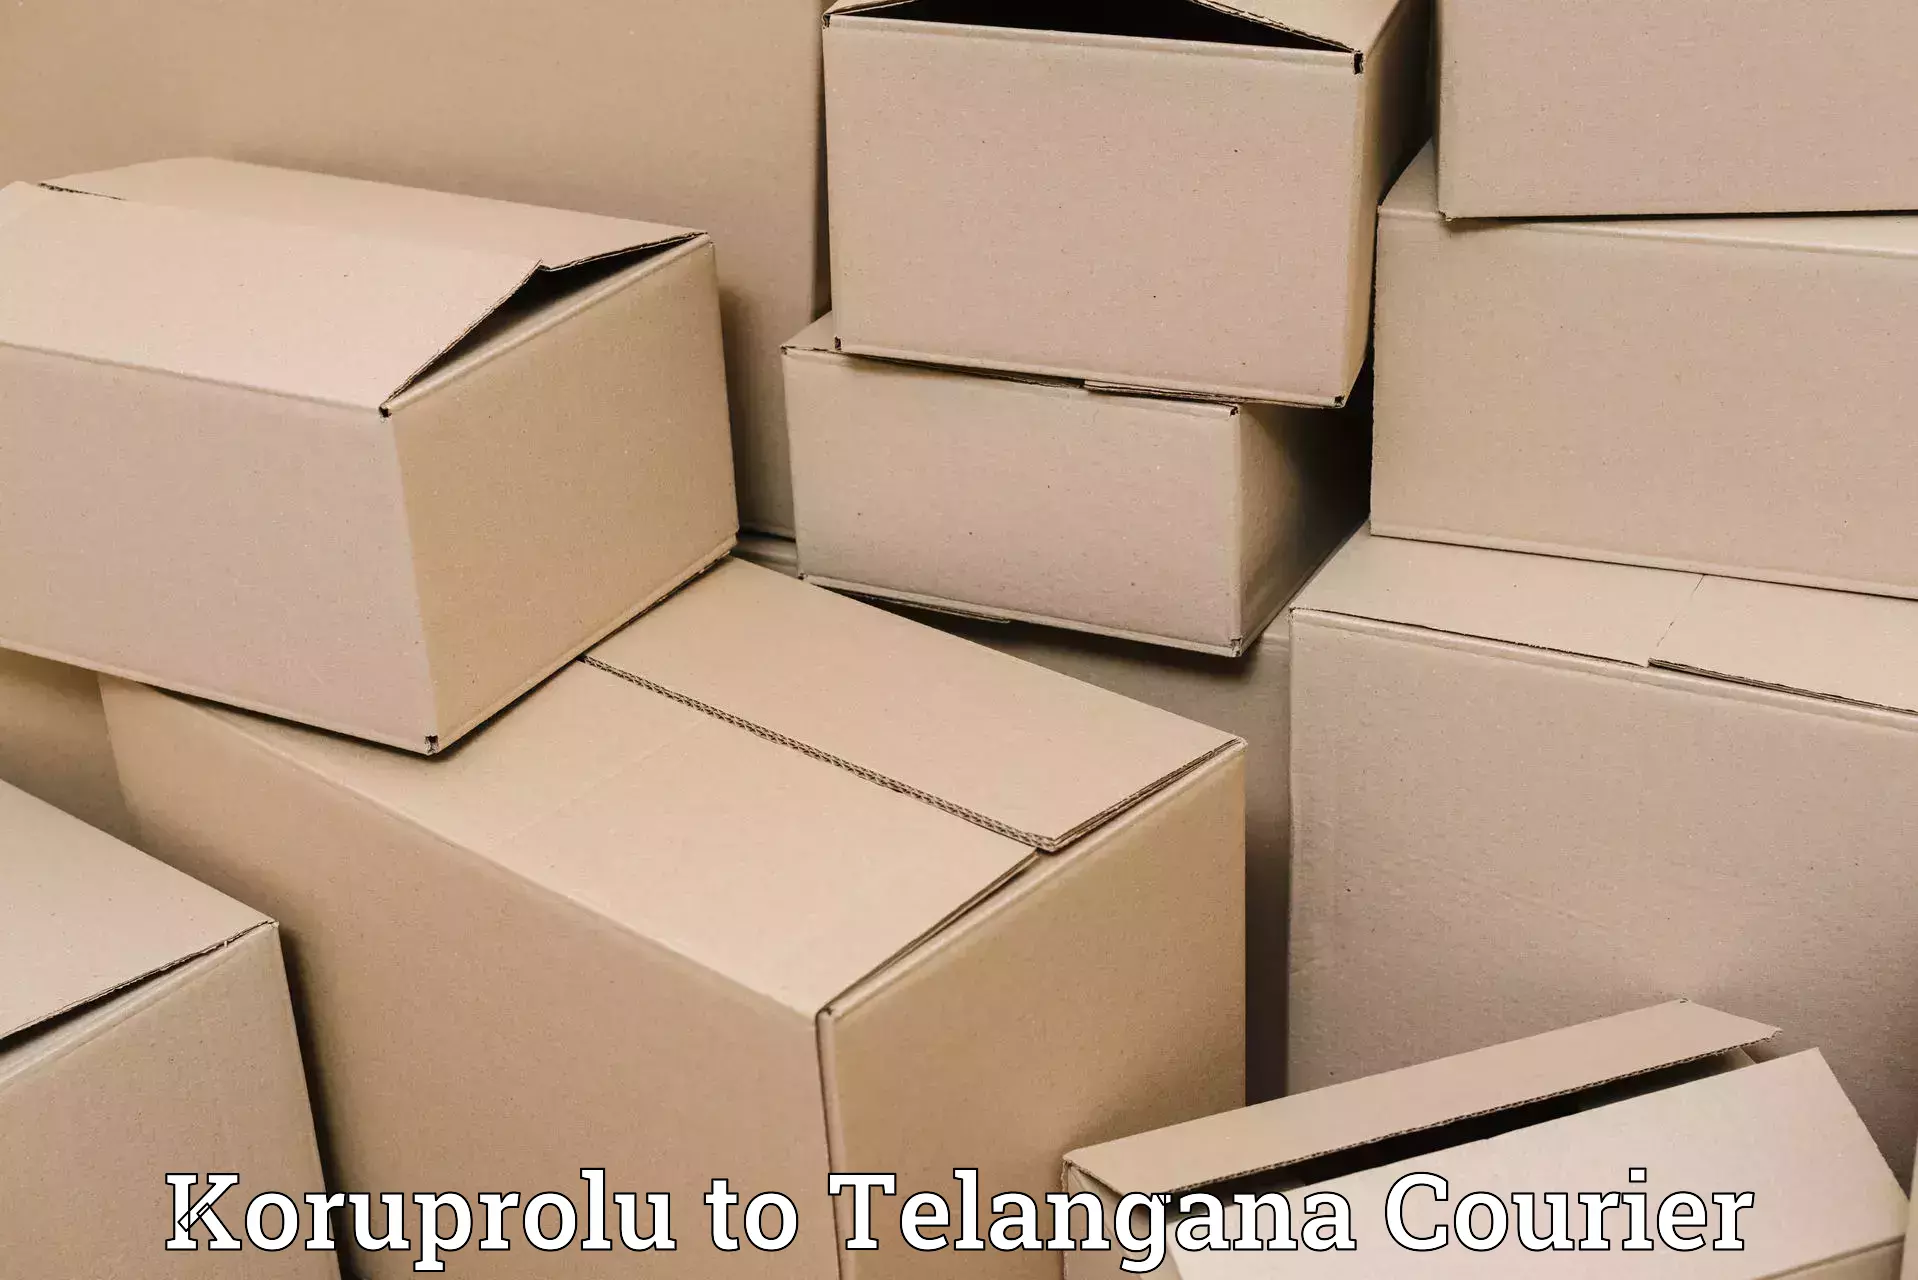 On-demand delivery Koruprolu to Bhainsa